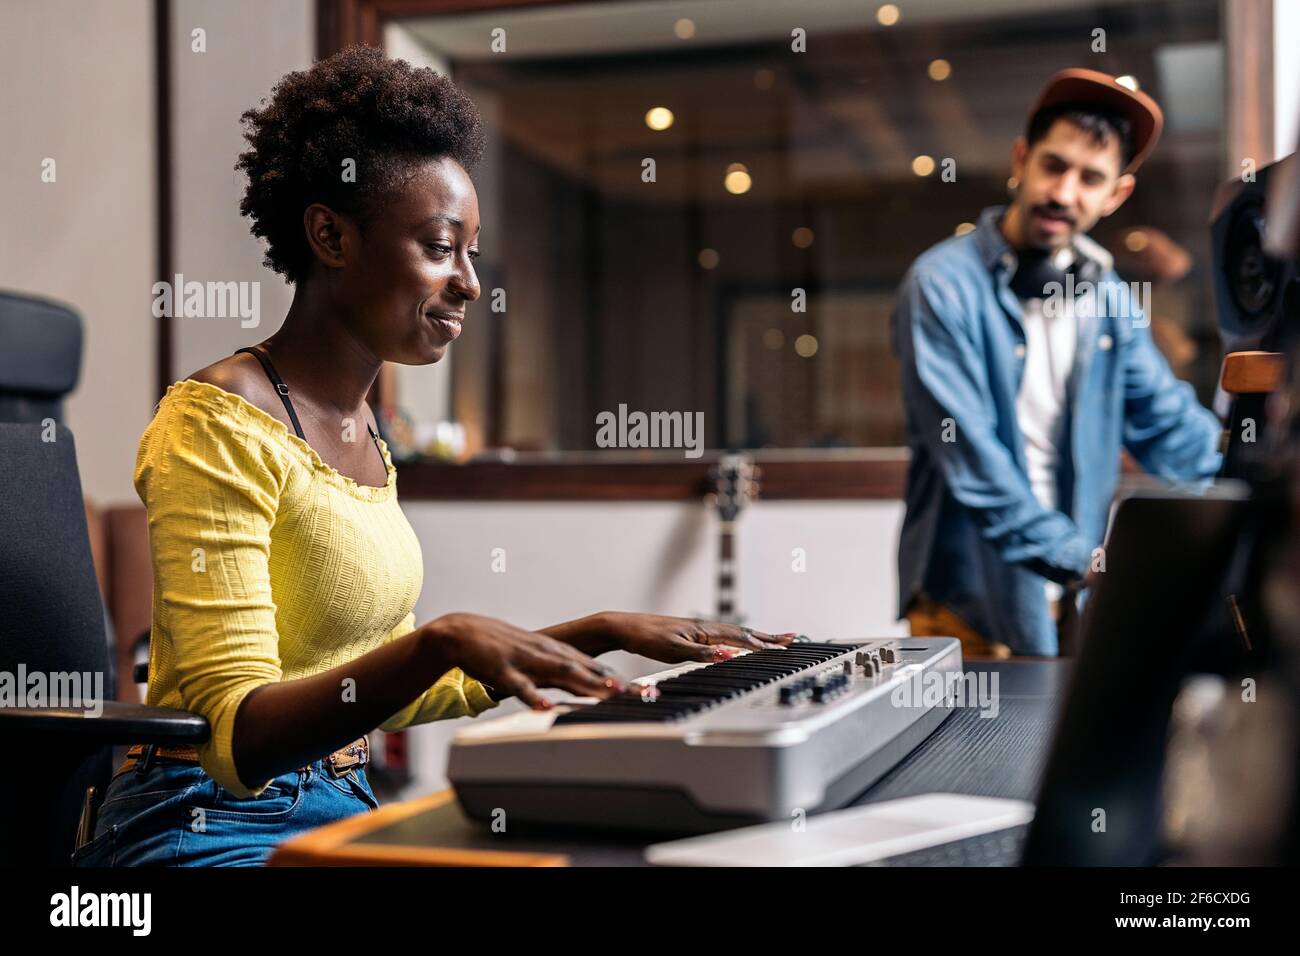 Stock photo of black woman playing electronic piano keyboard in music studio. Stock Photo